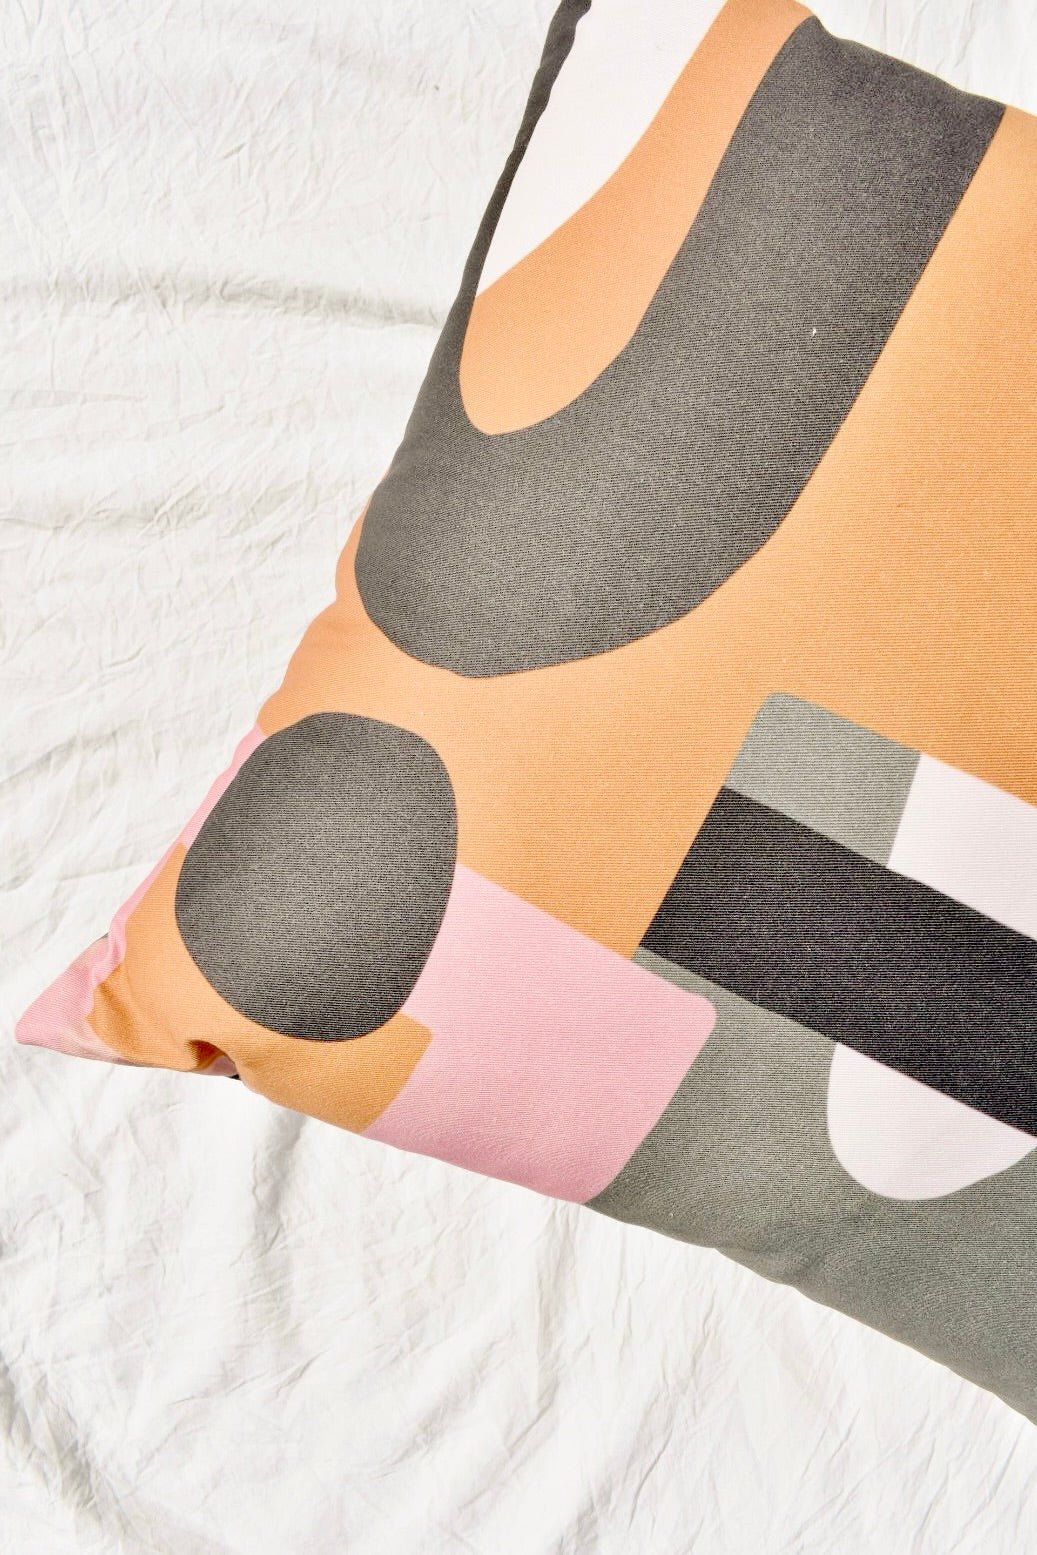 Cameo Pillow - Ardent Market - Ellie Hazlett Studio